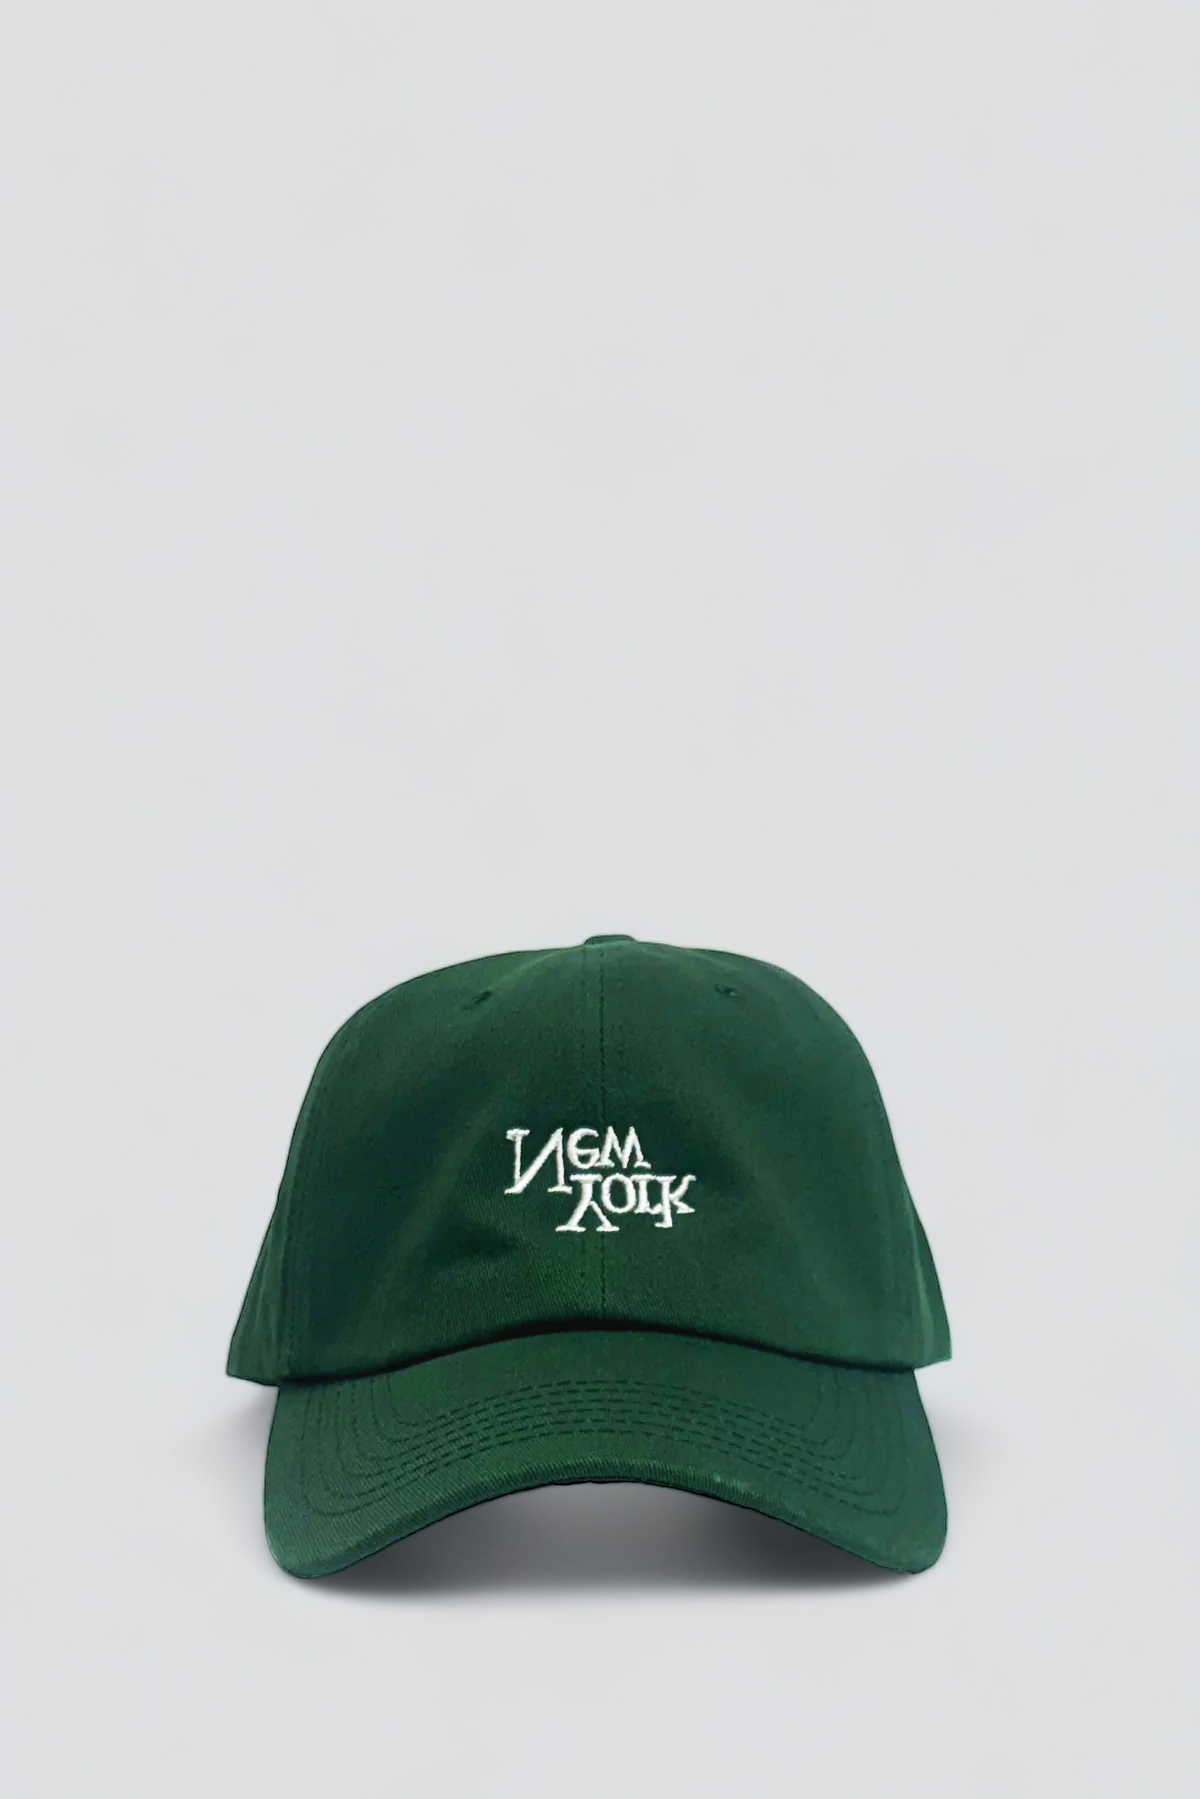 New York V2 Embroidered Hat - Forest Green/White